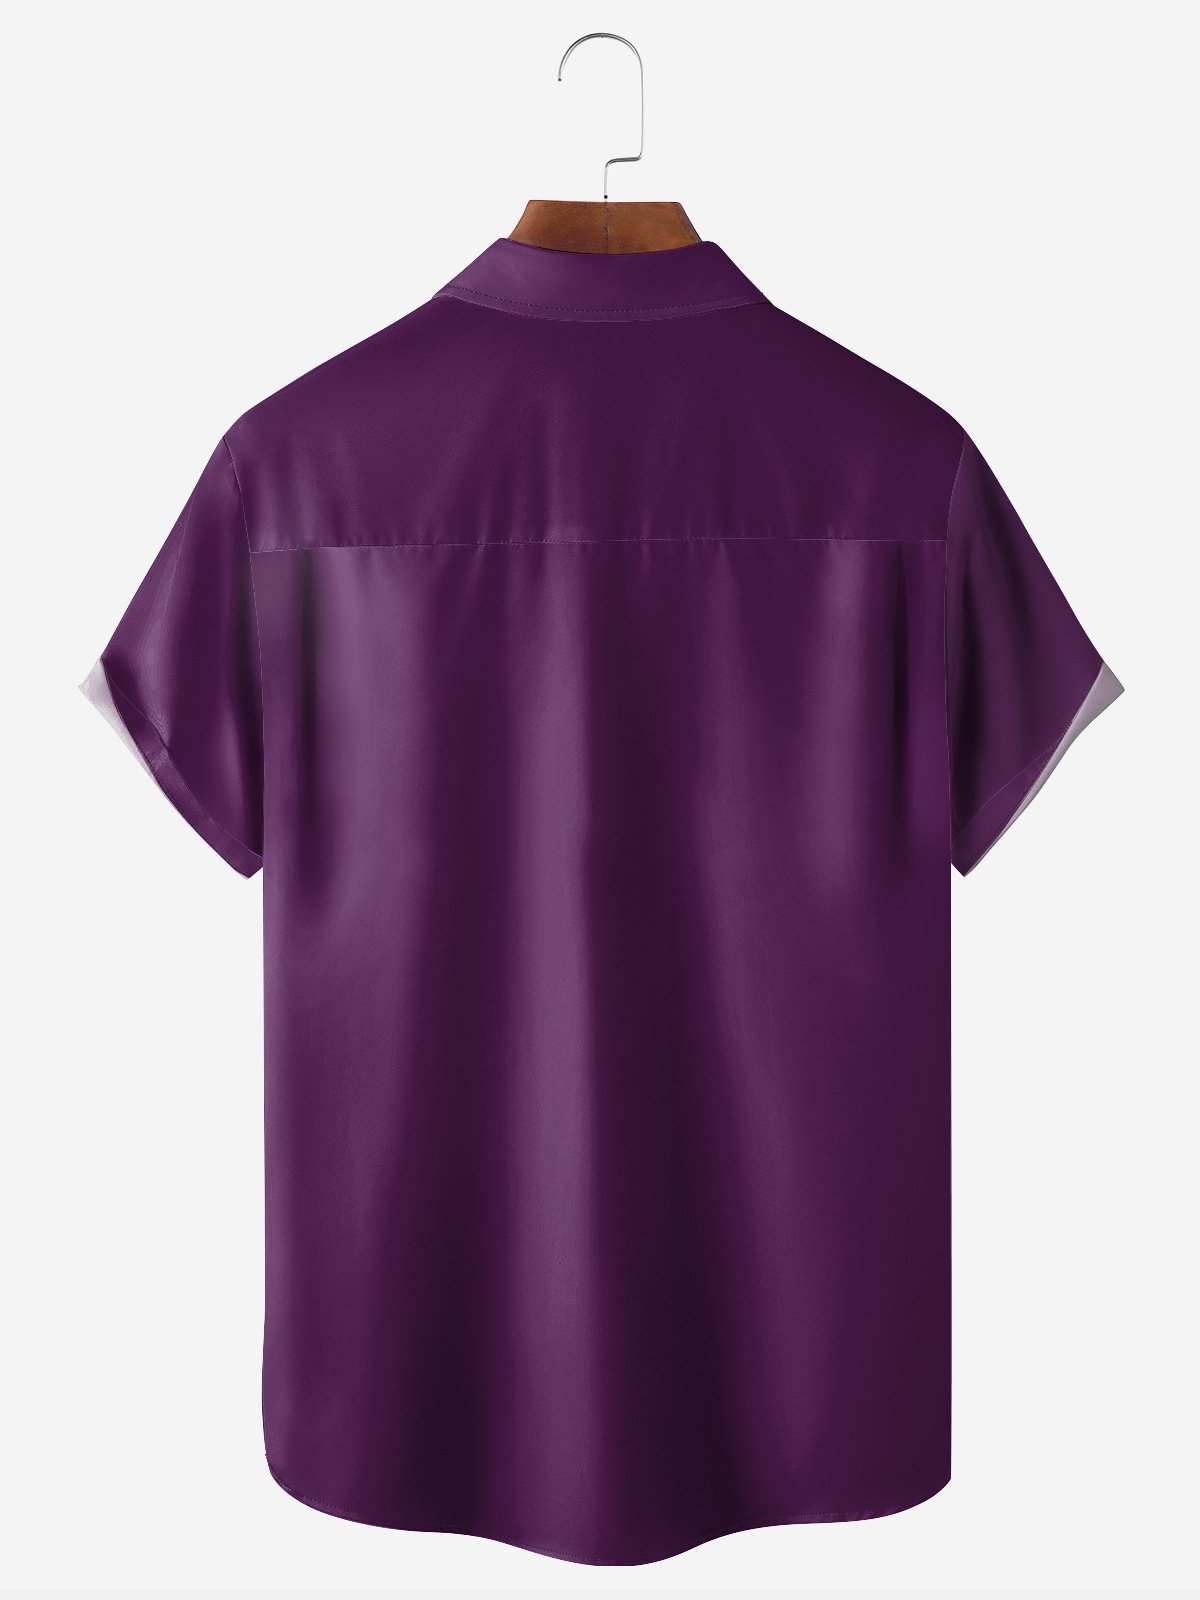 Hardaddy Mardi Gras Chest Pocket Short Sleeve Casual Shirt